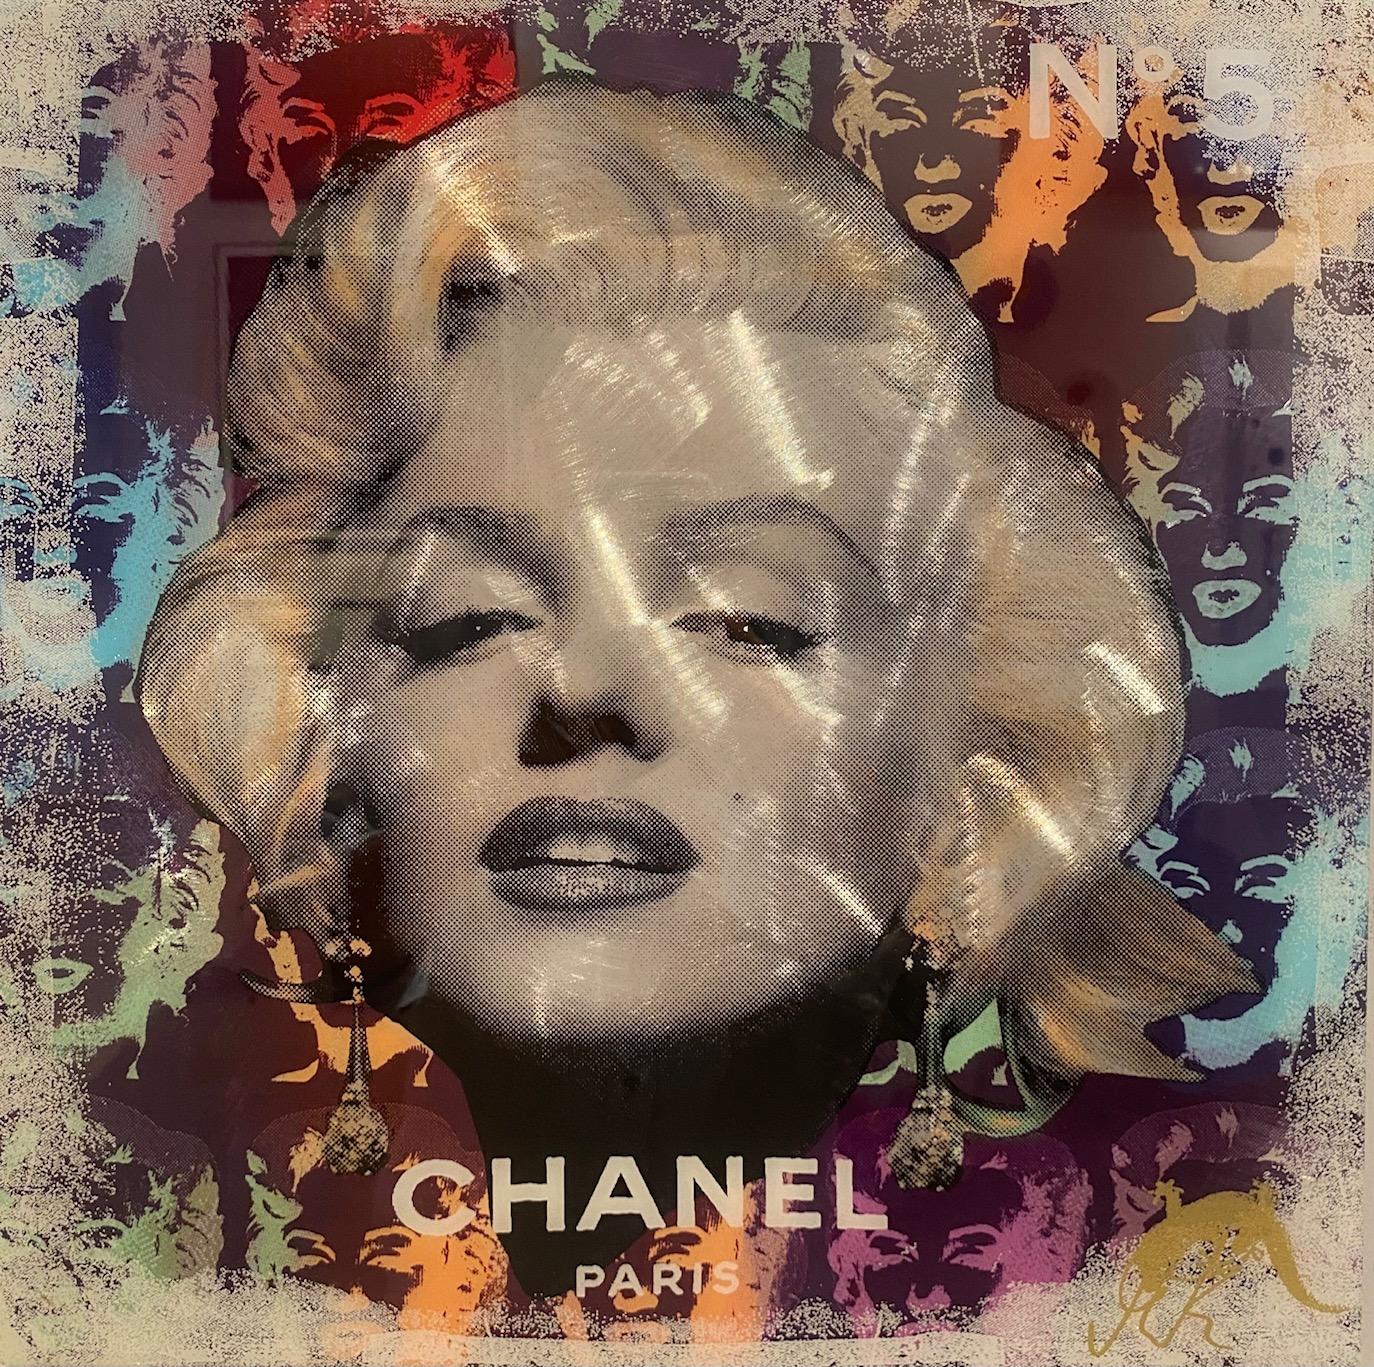 Chanel No. 5 - portrait contemporain original de l'icône pop art Marilyn Monroe - Mixed Media Art de Devin Miles